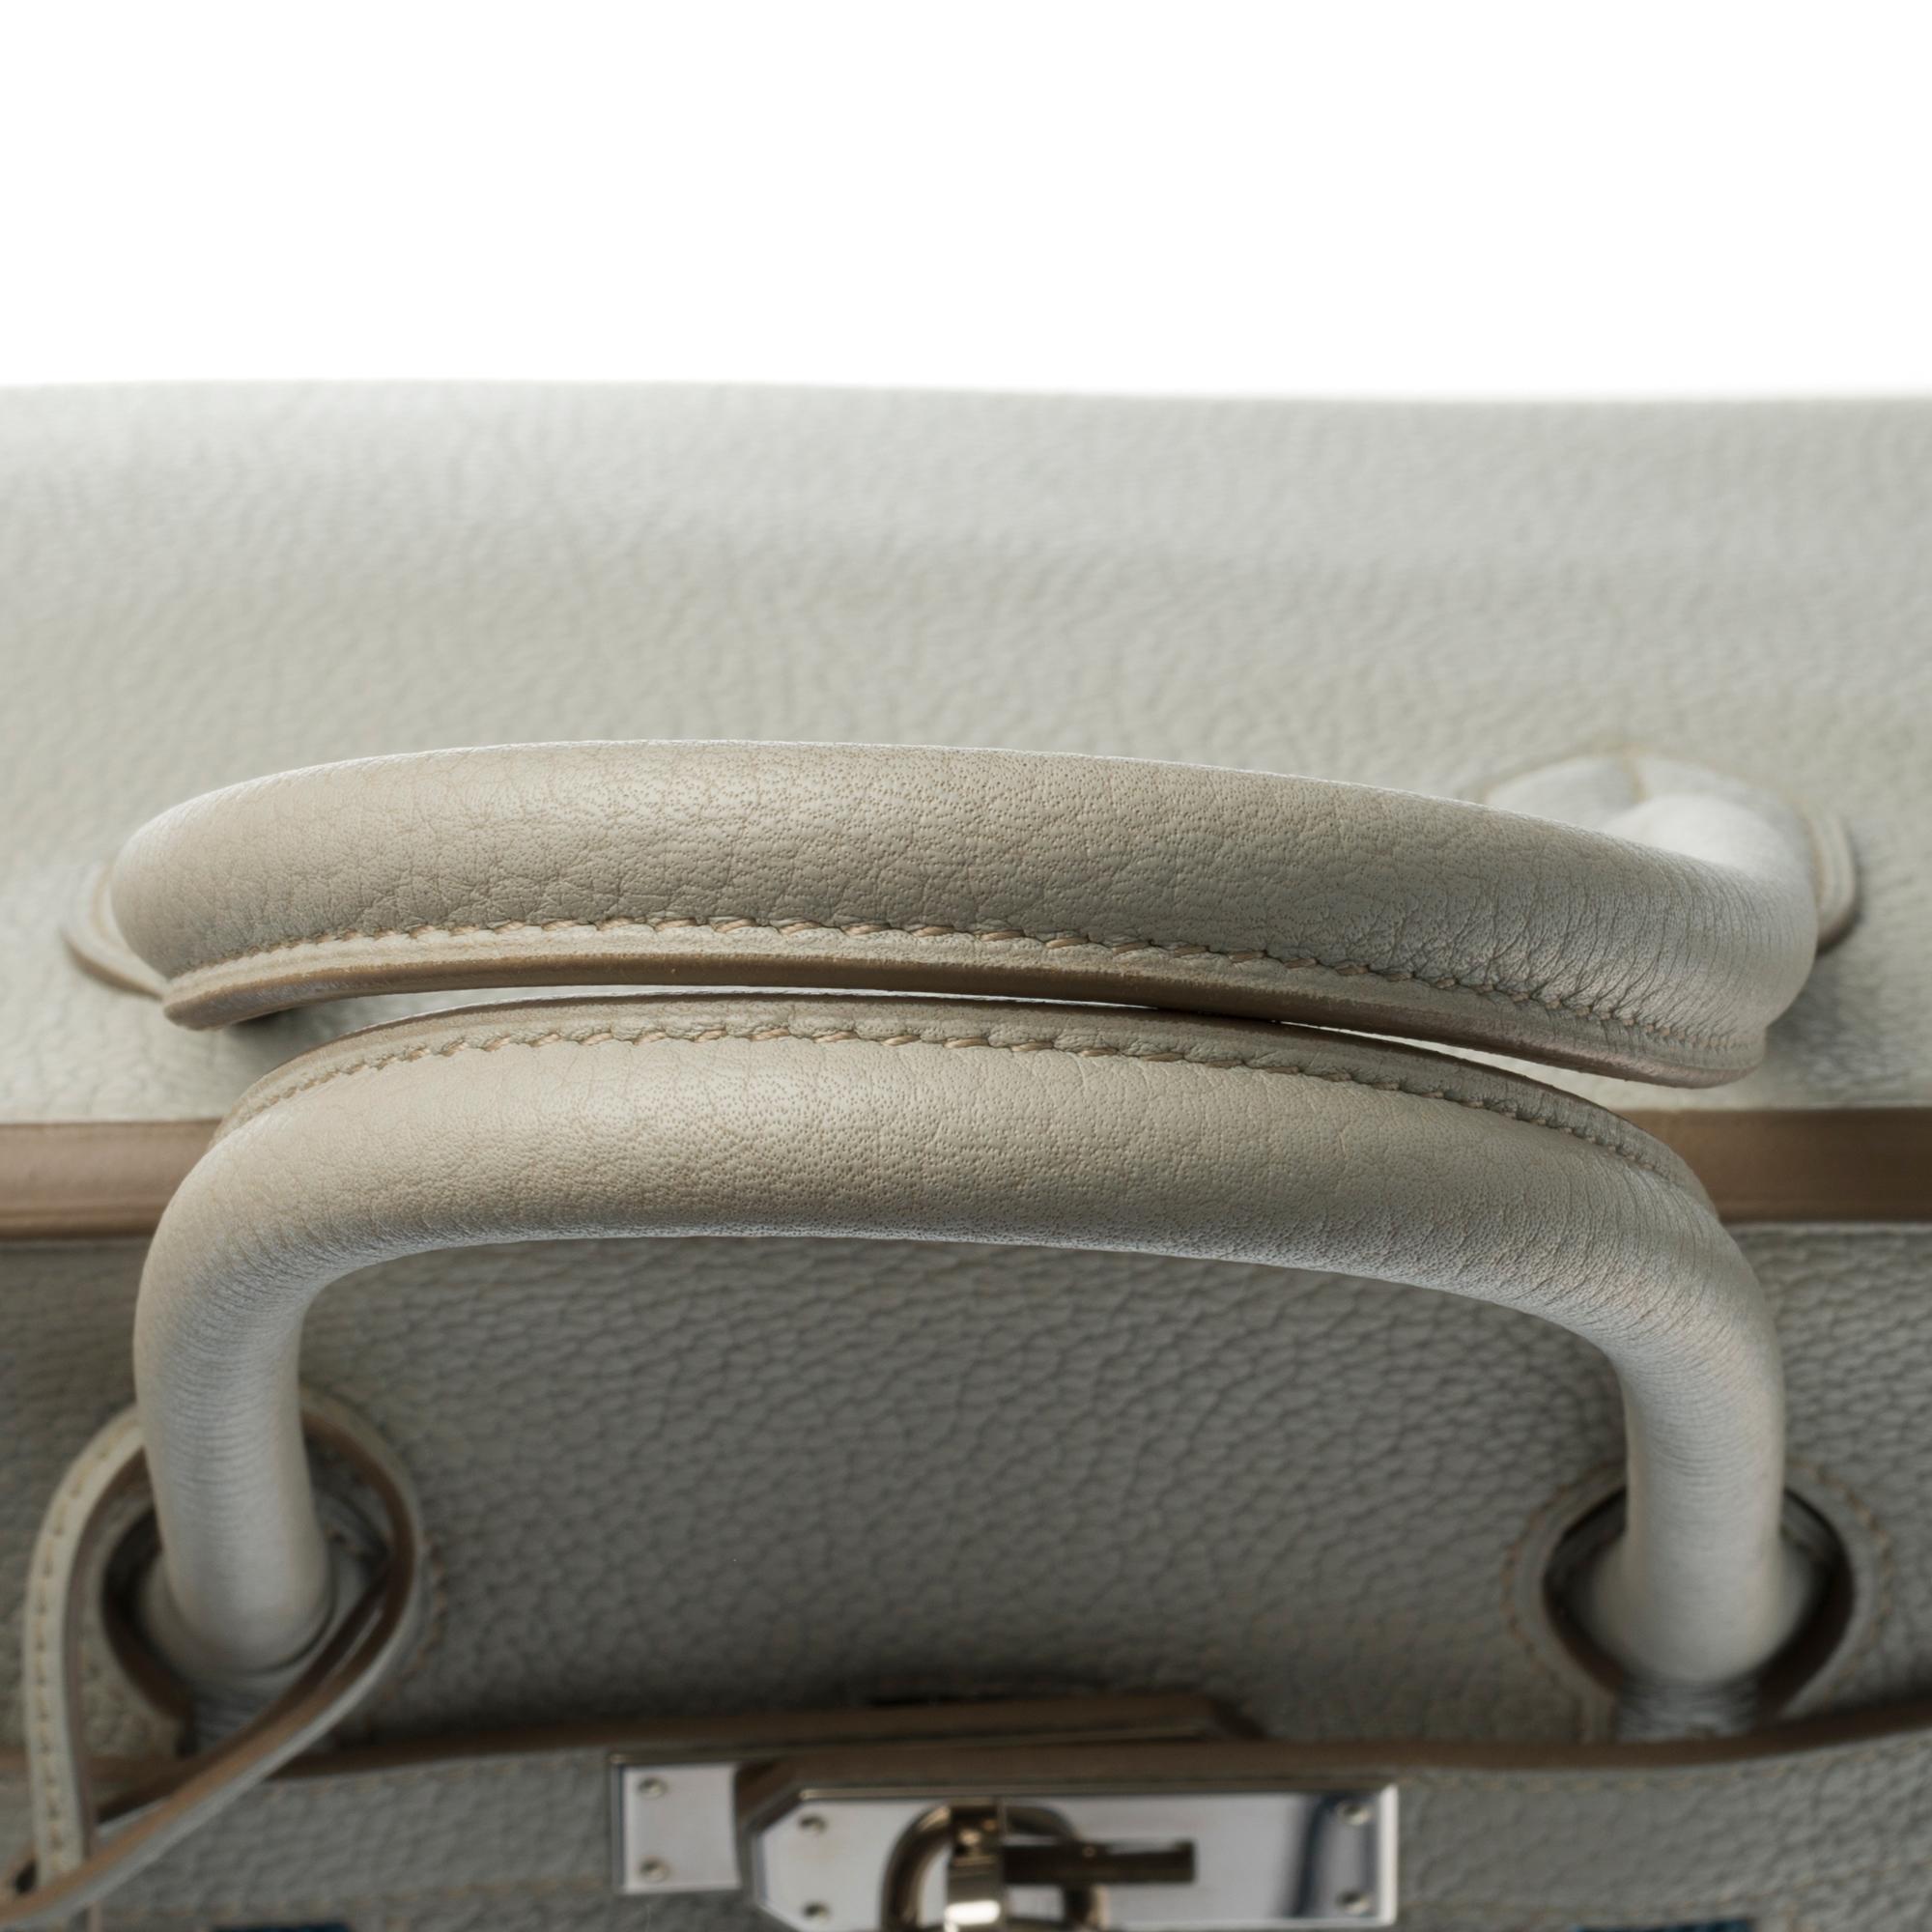 Rare Hermès Birkin Club 35 handbag in grey, white leather and blue lizard, SHW 3